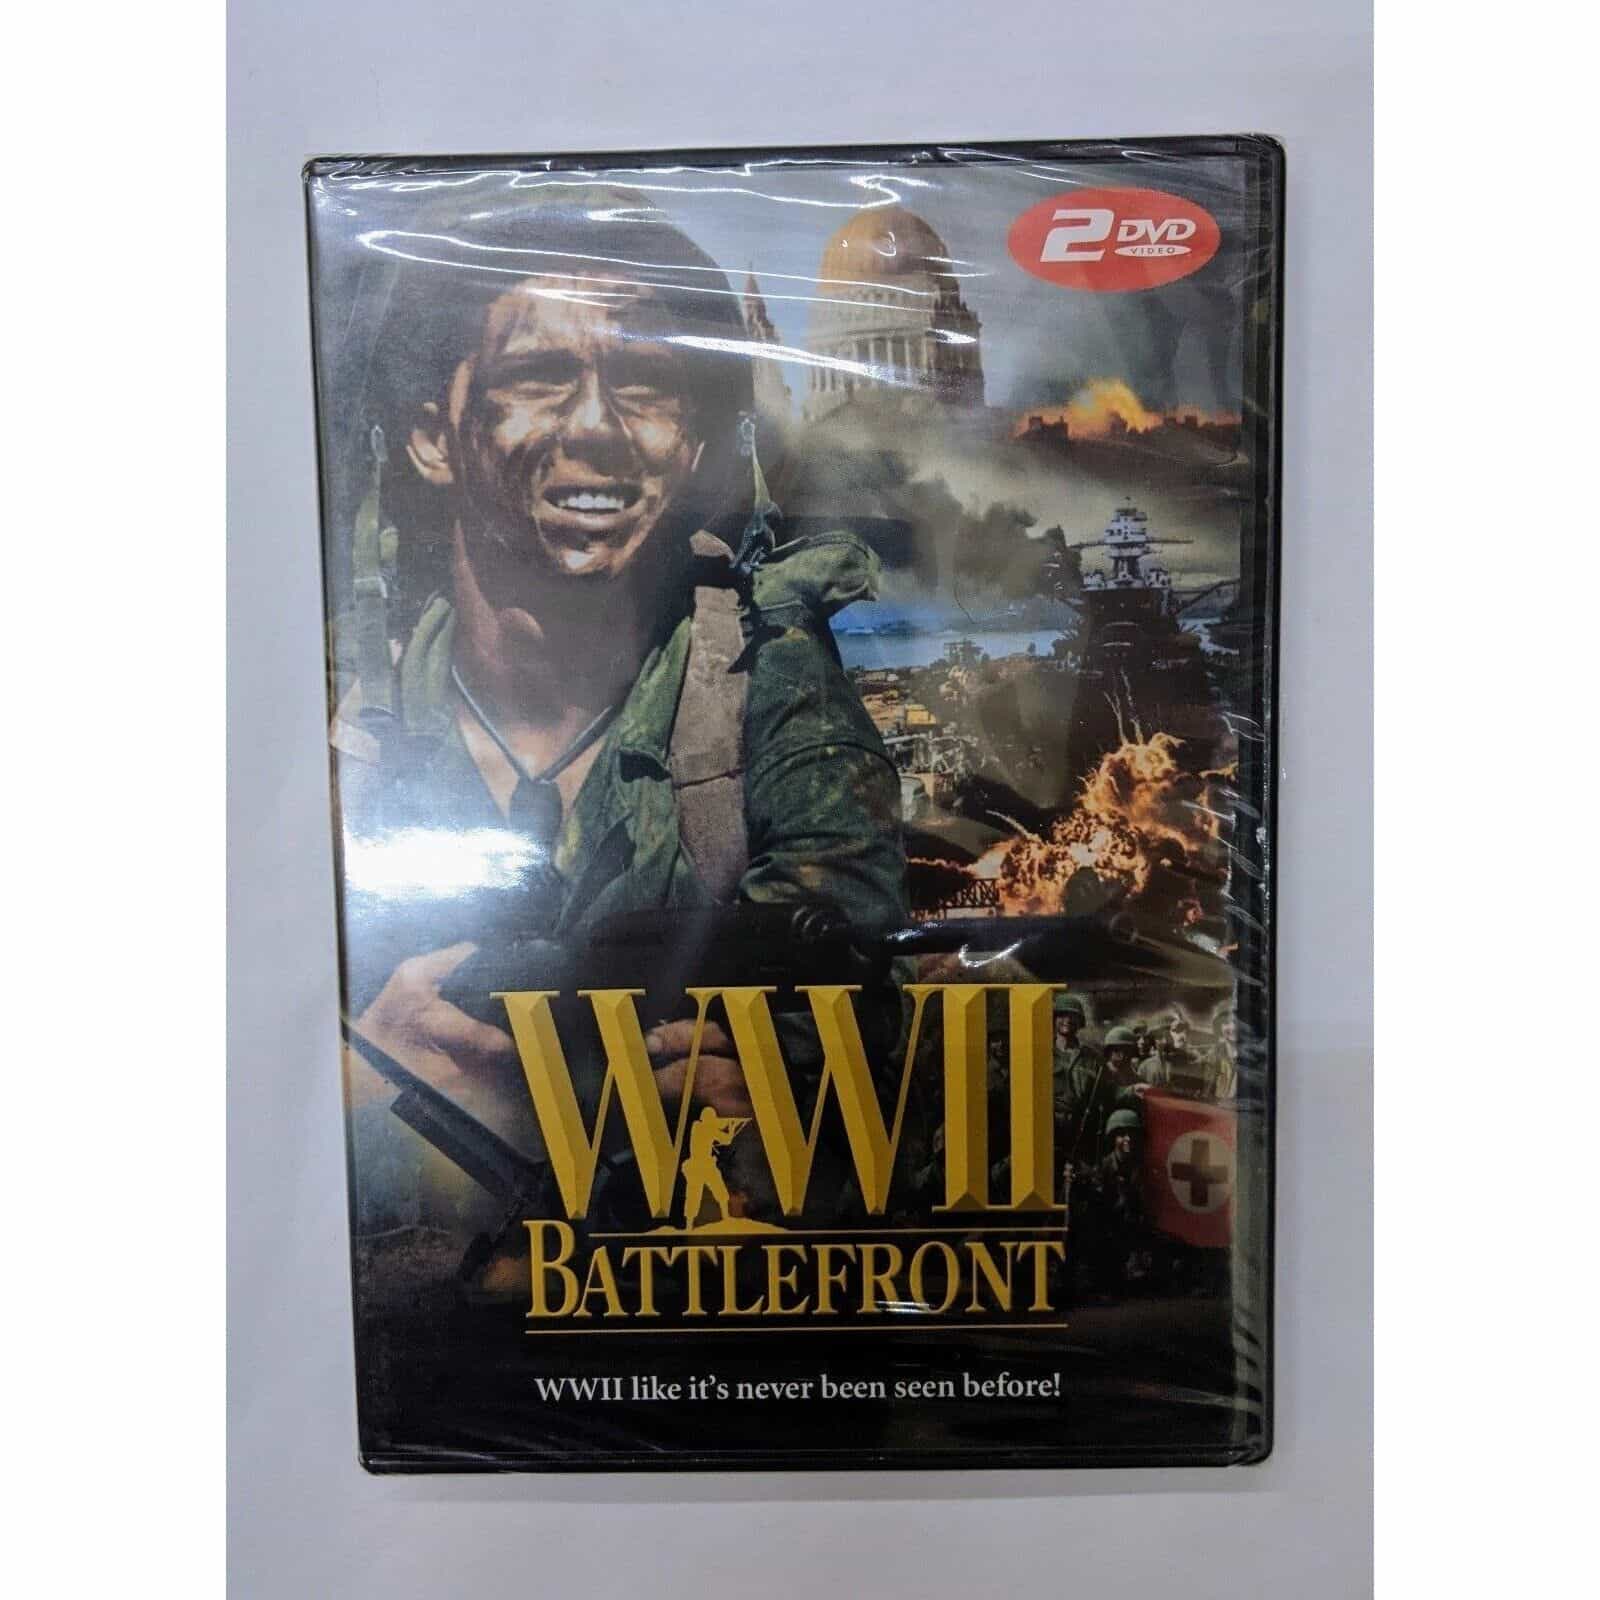 WWII Battlefront DVD